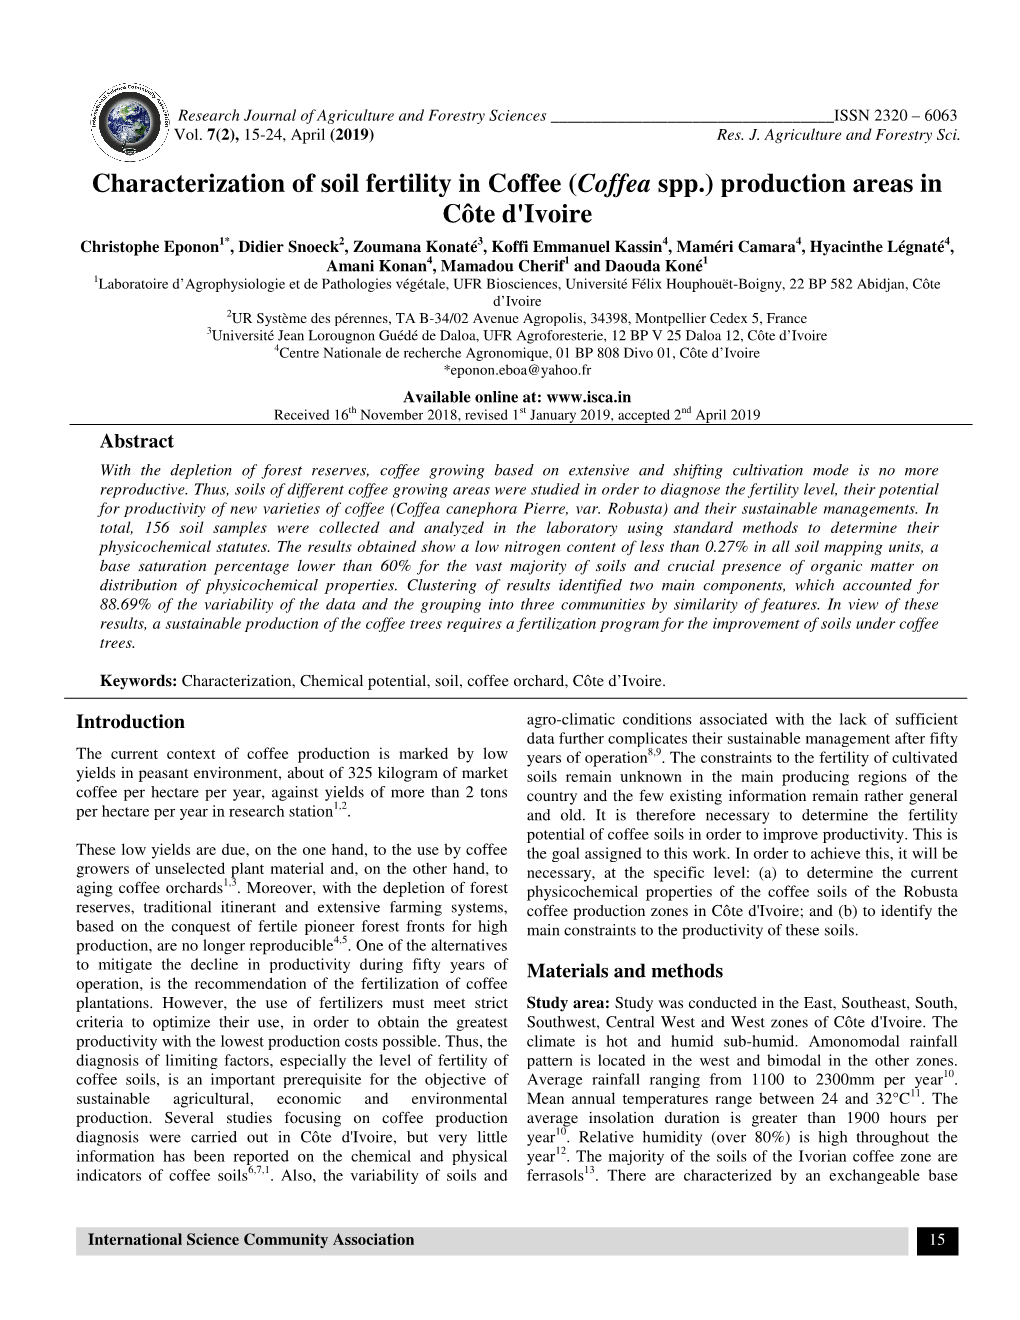 Ion of Soil Fertility in Coffee (Coffea Spp.) Production Area Côte D'ivoire